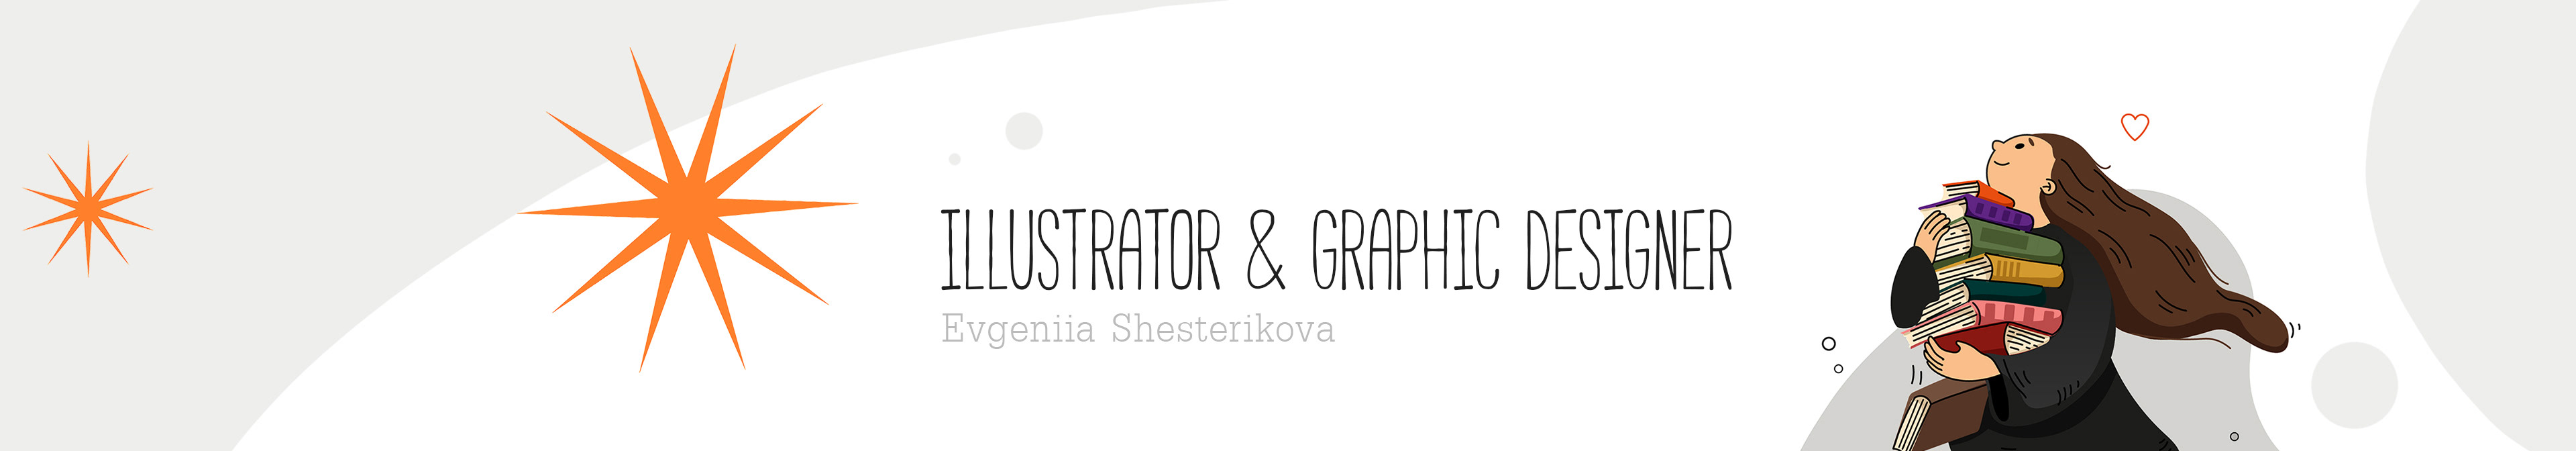 Evgeniia Shesterikova's profile banner